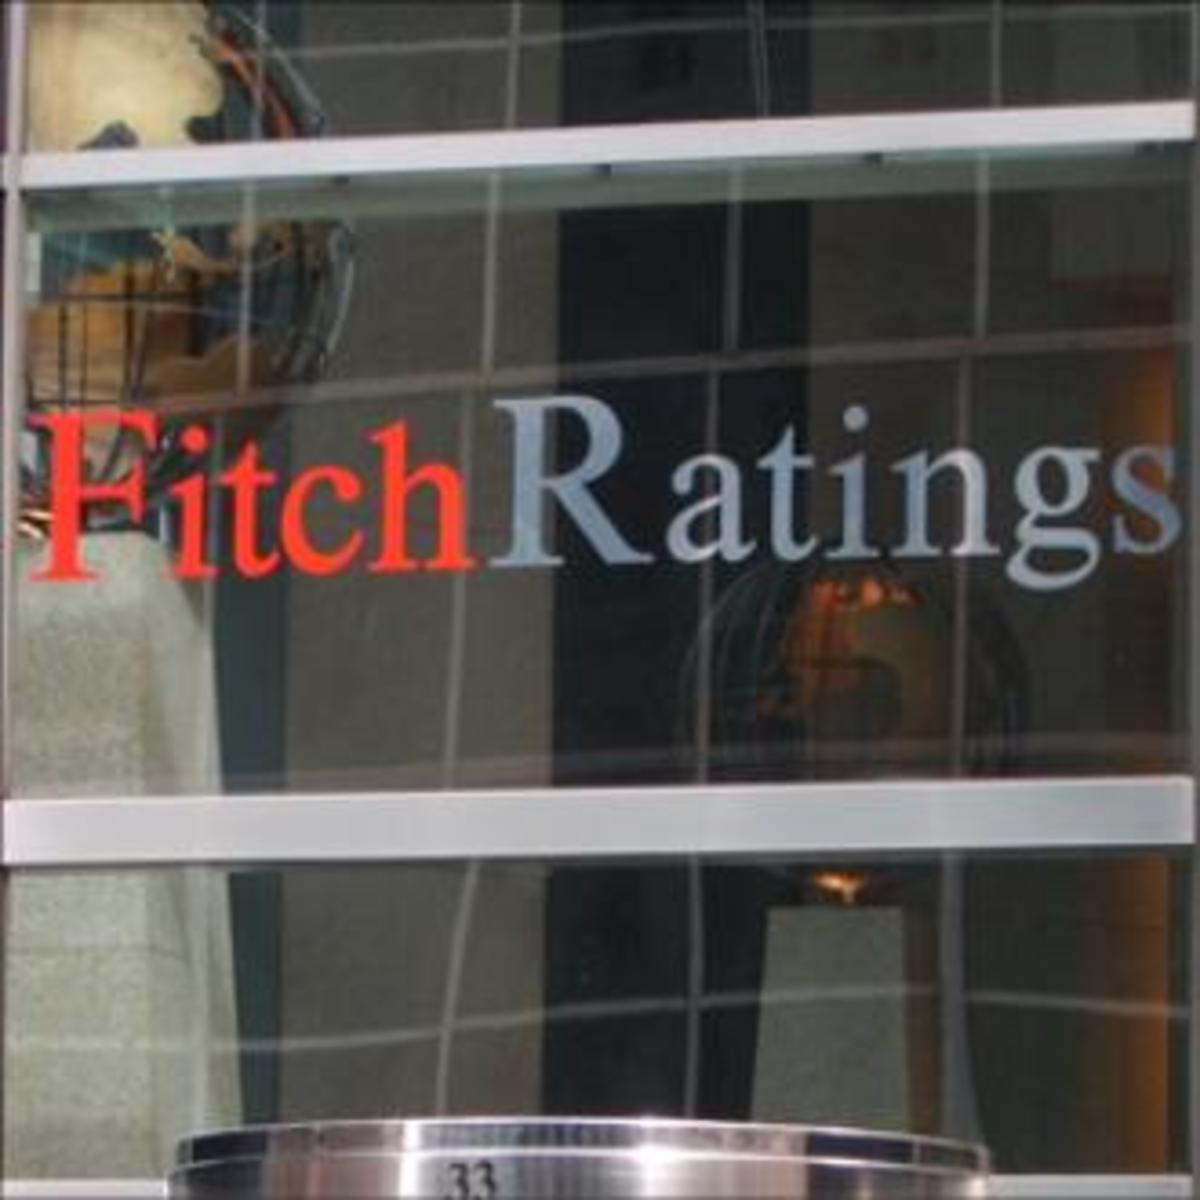 O οίκος Fitch υποβάθμισε 4 από τις μεγαλύτερες πορτογαλικές τράπεζες